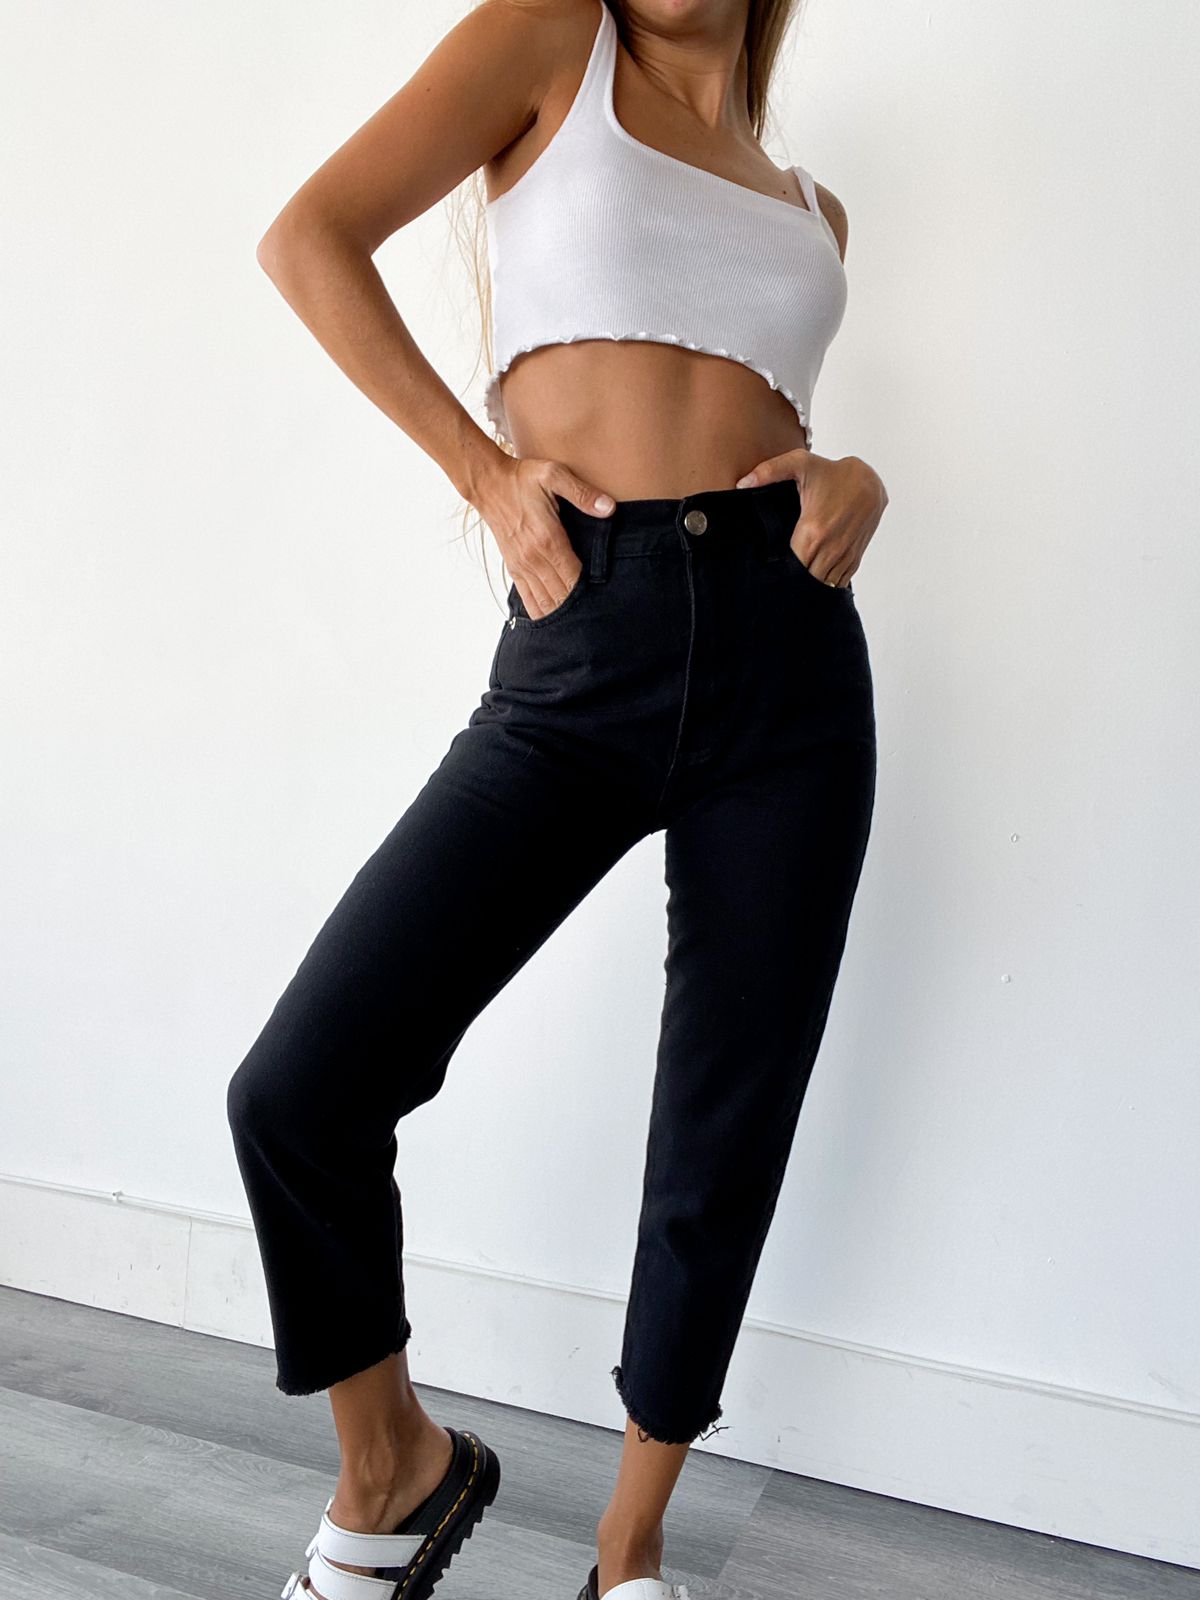 Prana High-Rise Skinny Jean #FlatteringFit OUTLET